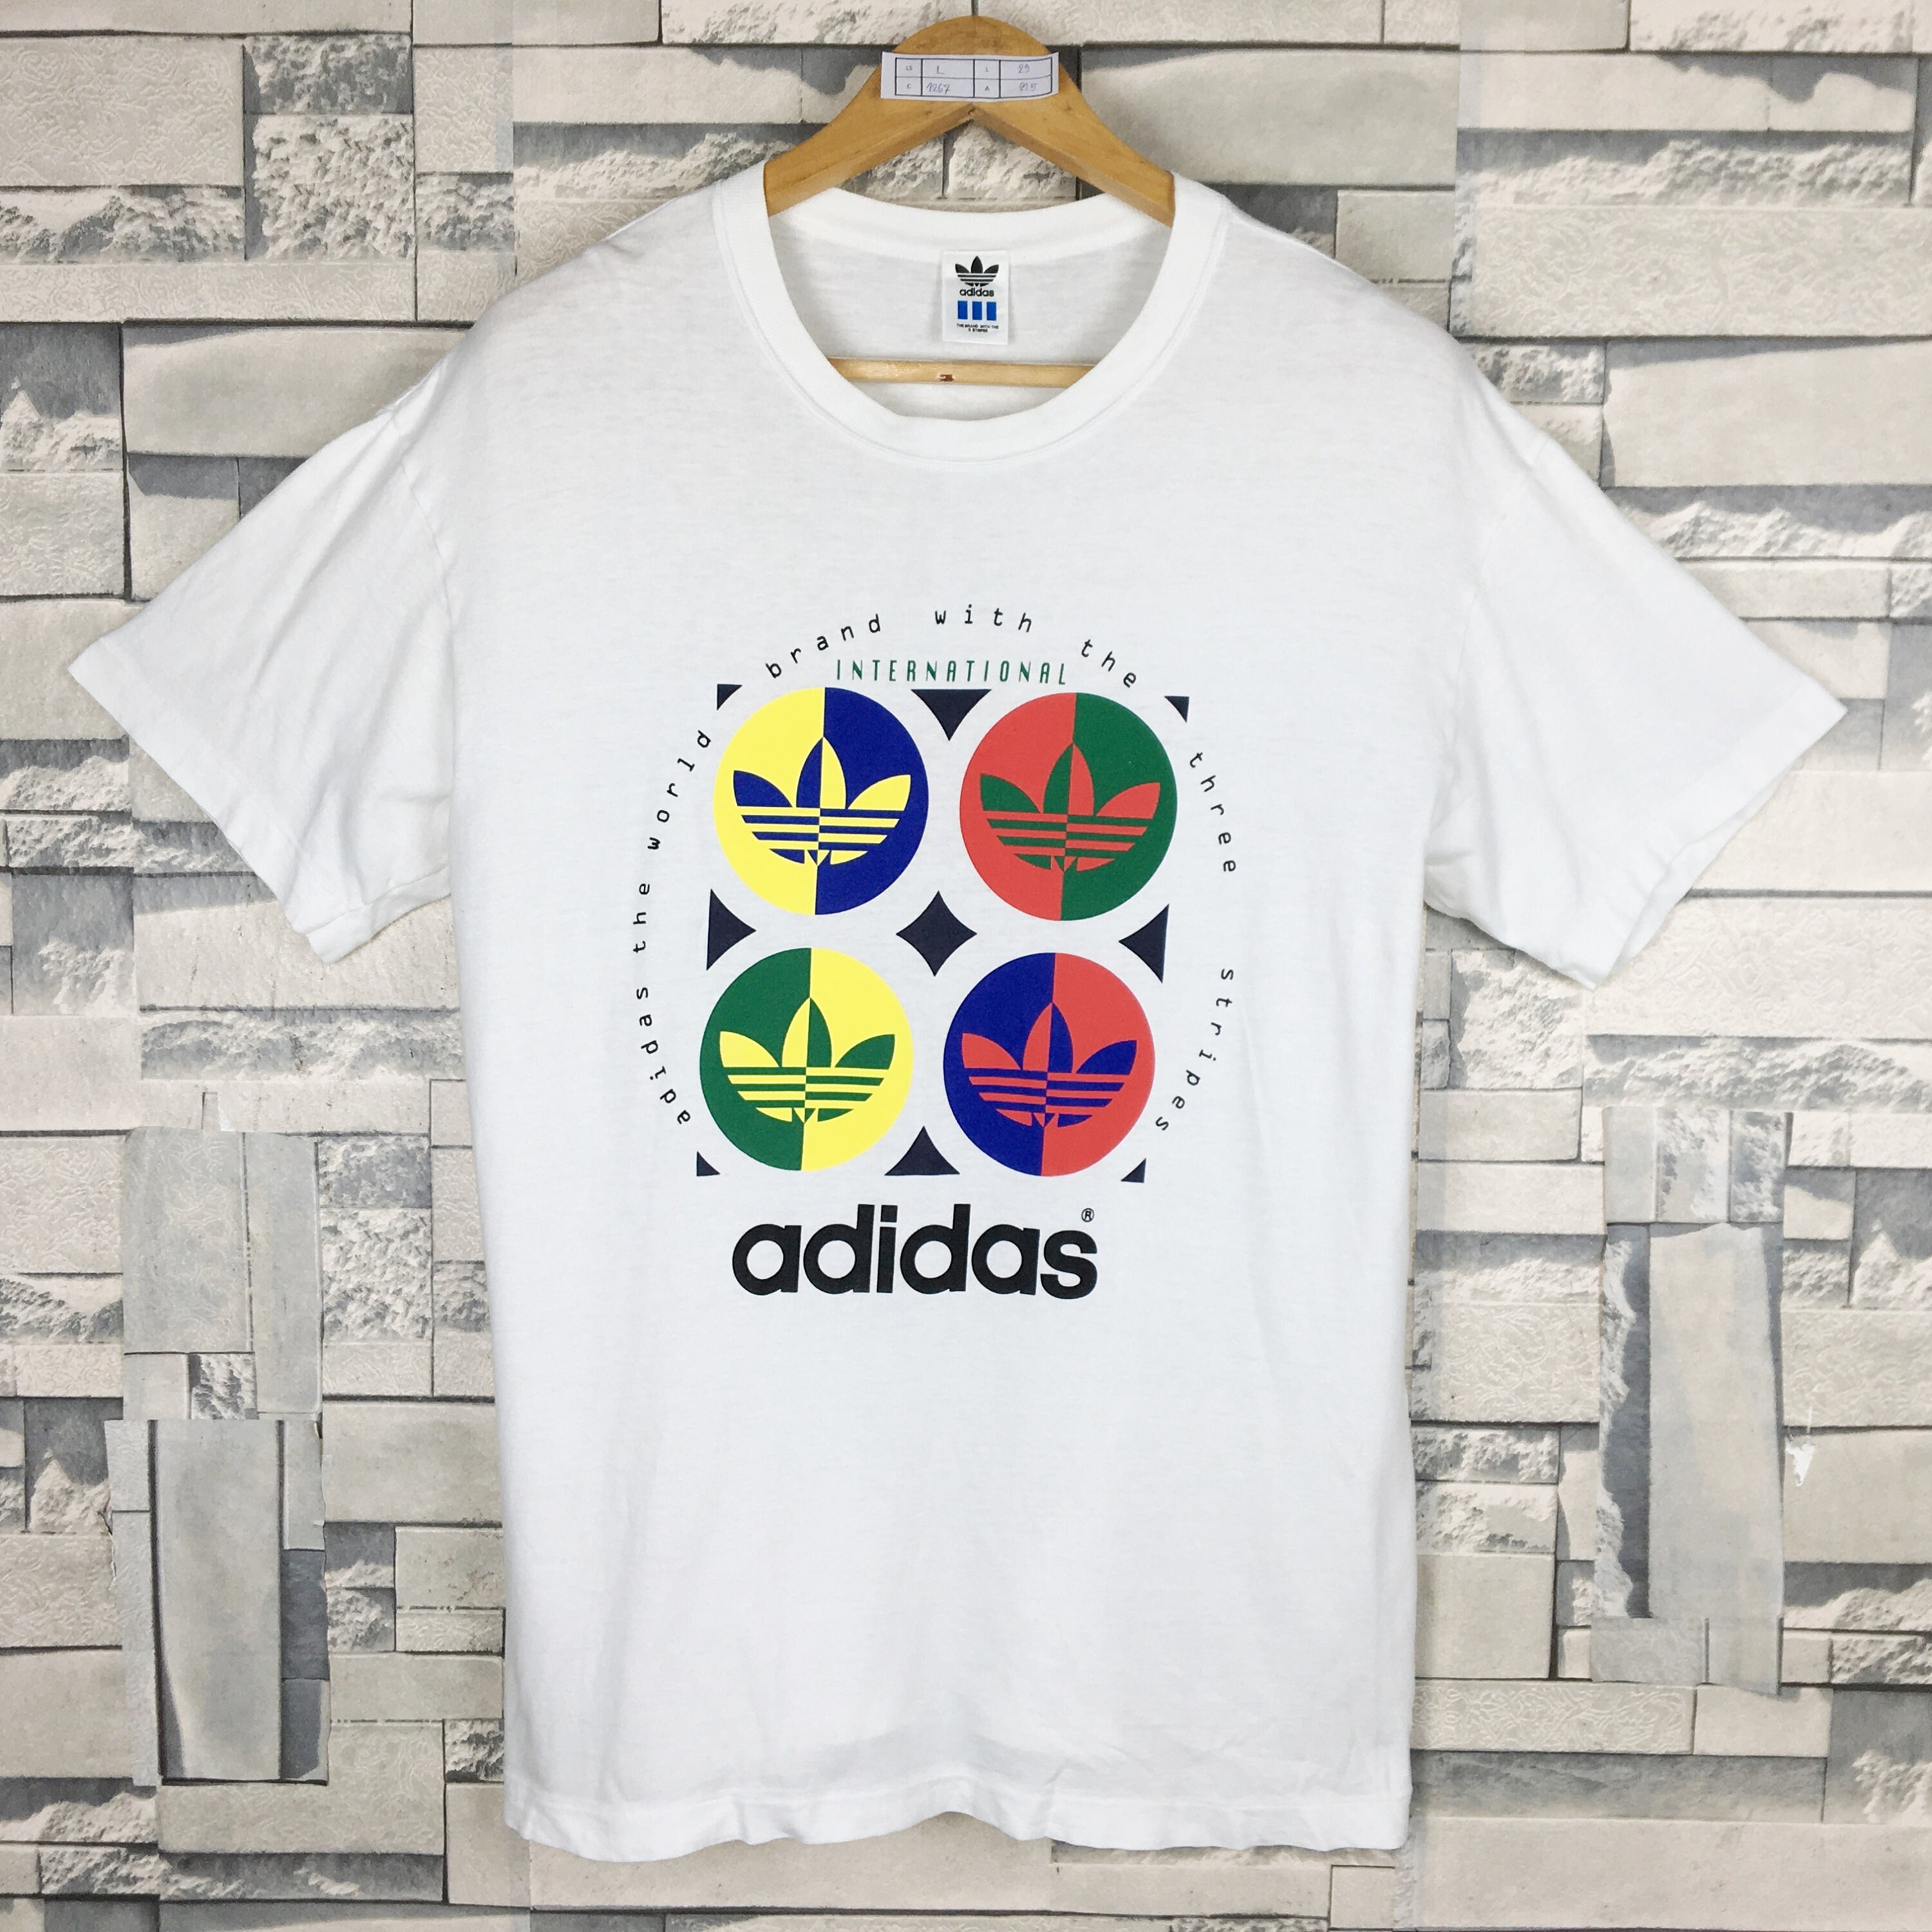 ADIDAS Equipment T-Shirt Large Vintage 90s Adidas Trefoil | Etsy